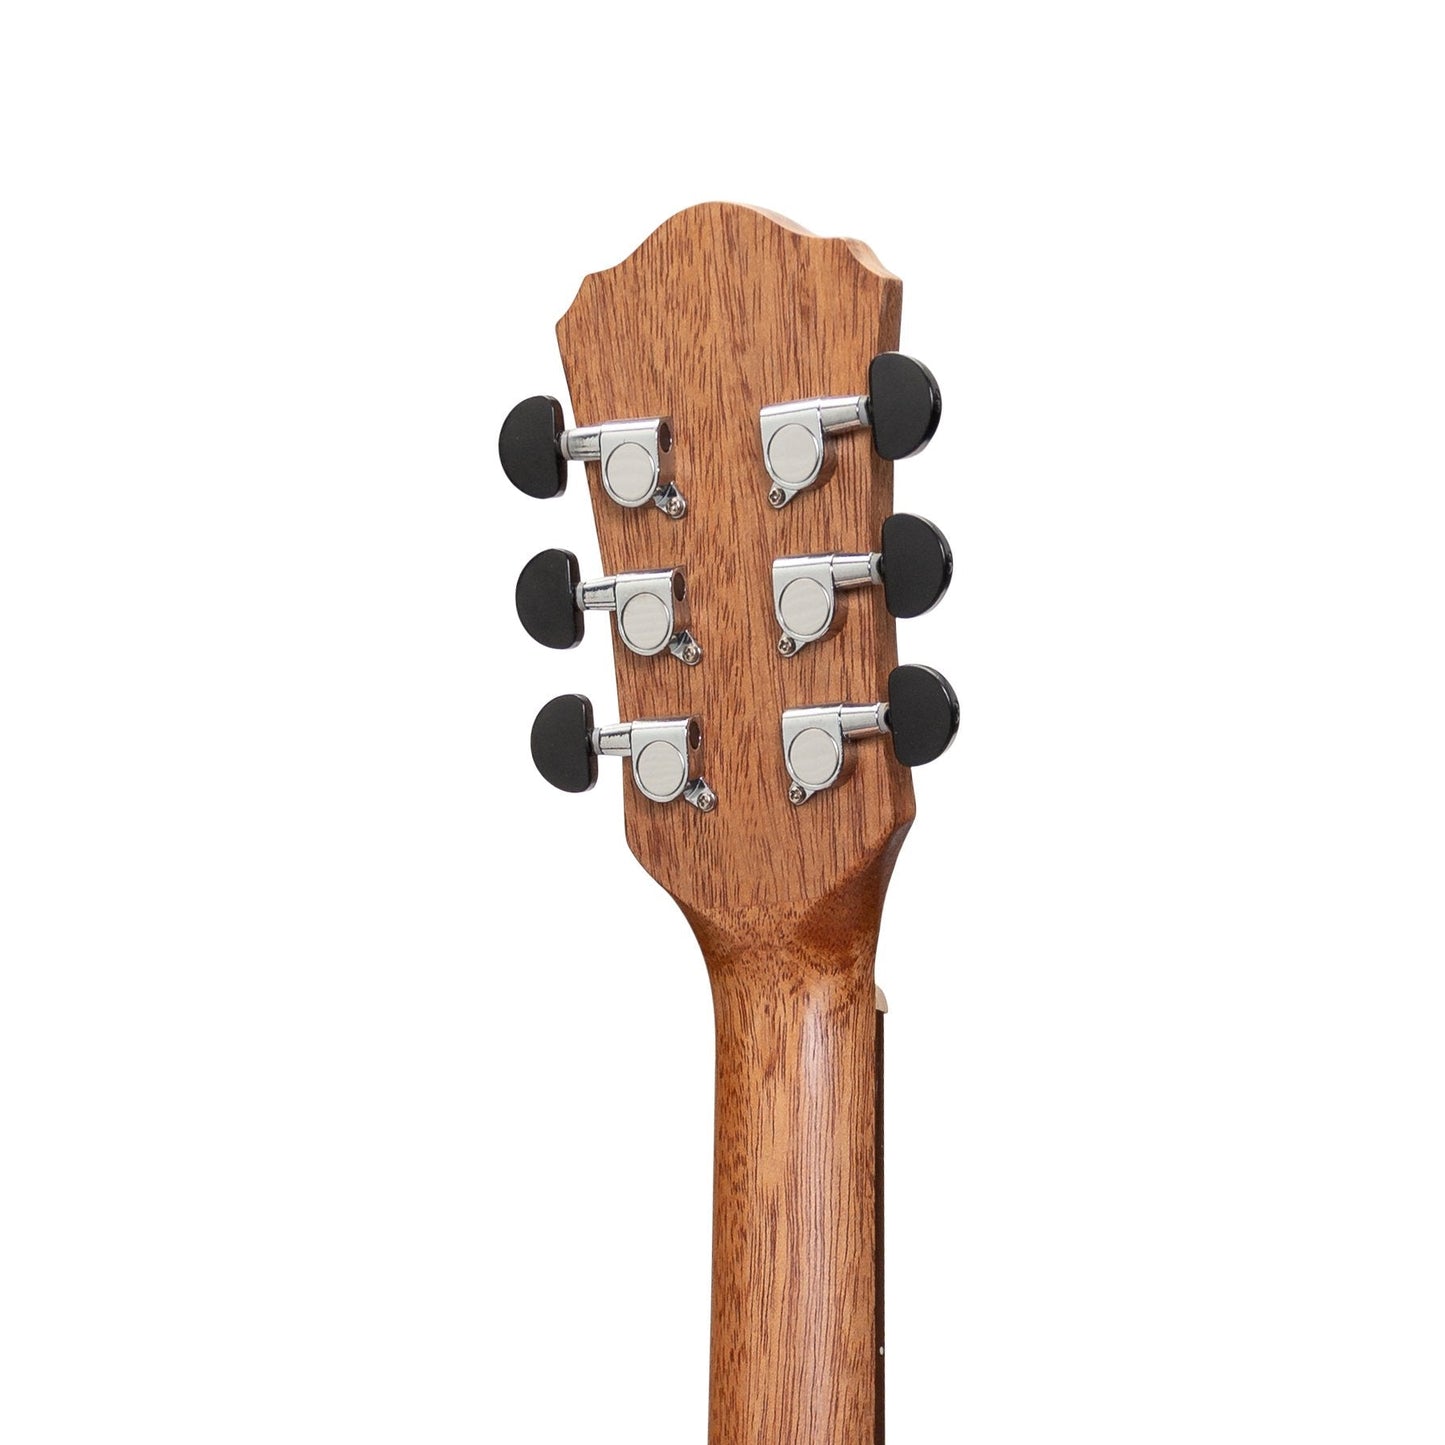 Martinez Acoustic-Electric Short Scale Guitar (Mahogany)